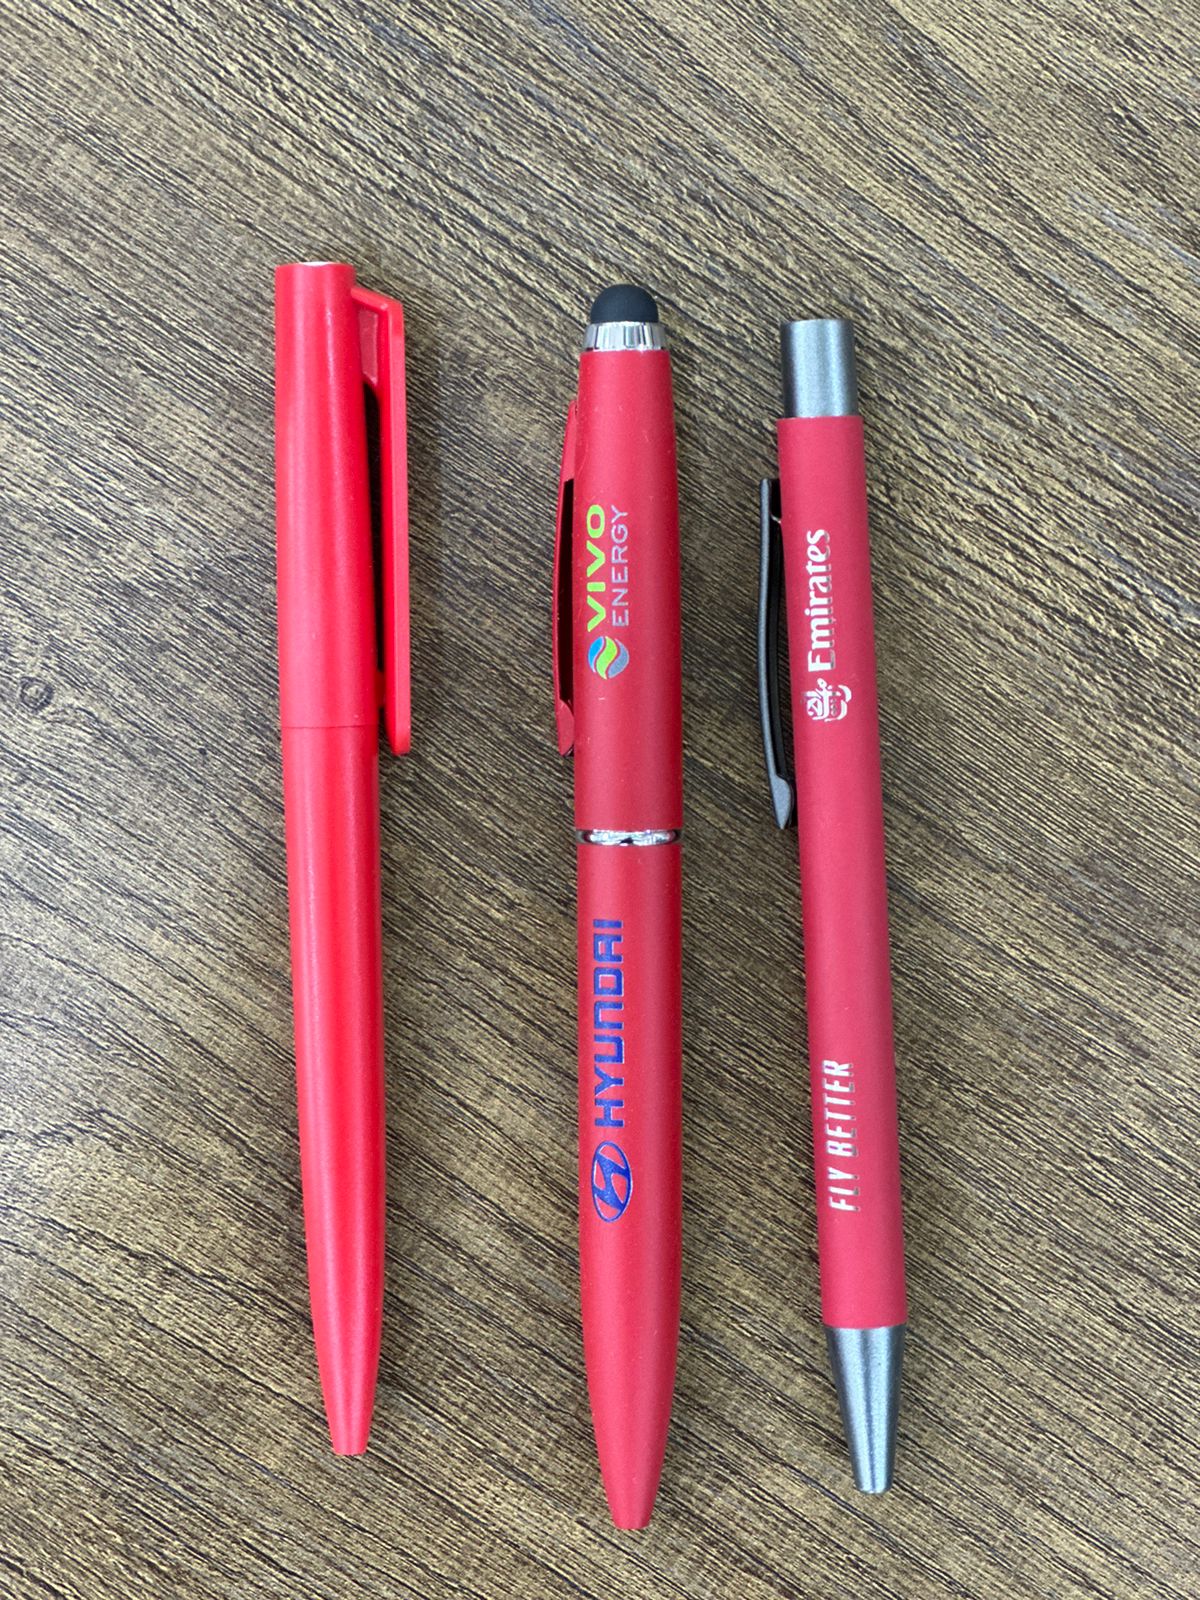 Customize pen in Dubai